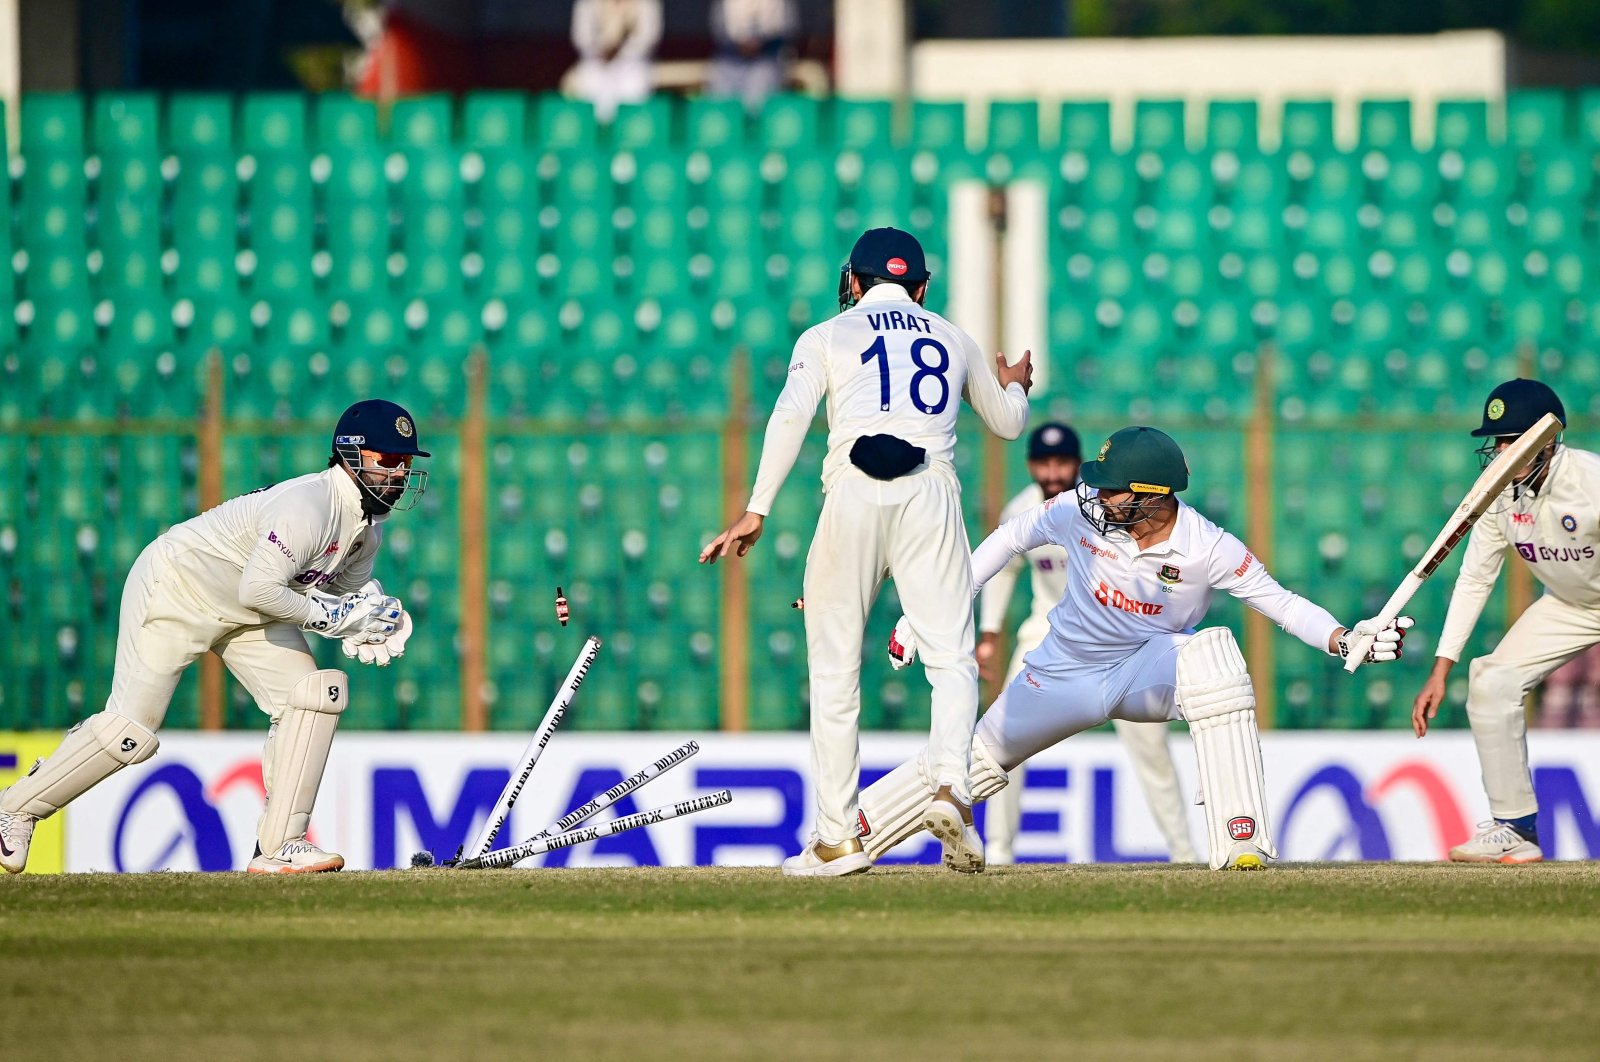 India mengalahkan Bangladesh yang tangguh untuk menjadi yang ke-2 dalam kejuaraan Tes kriket